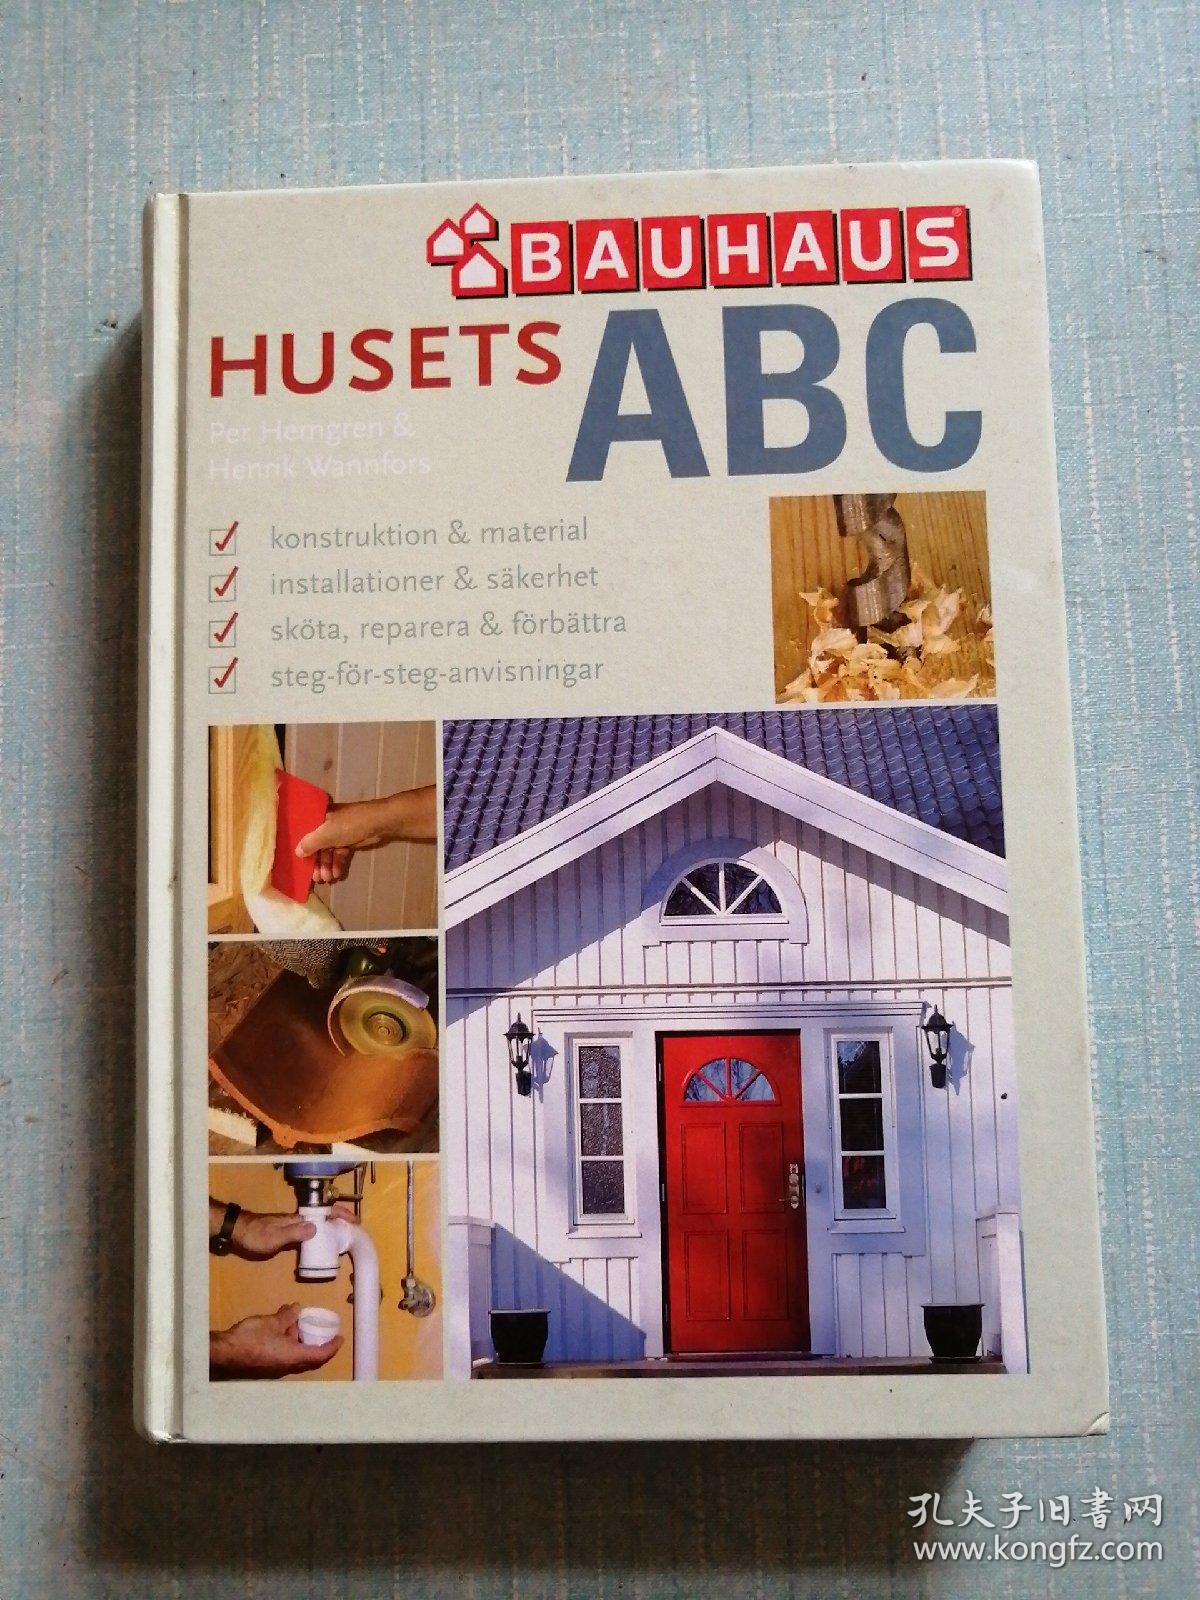 BUSES ABC BAUHAUS